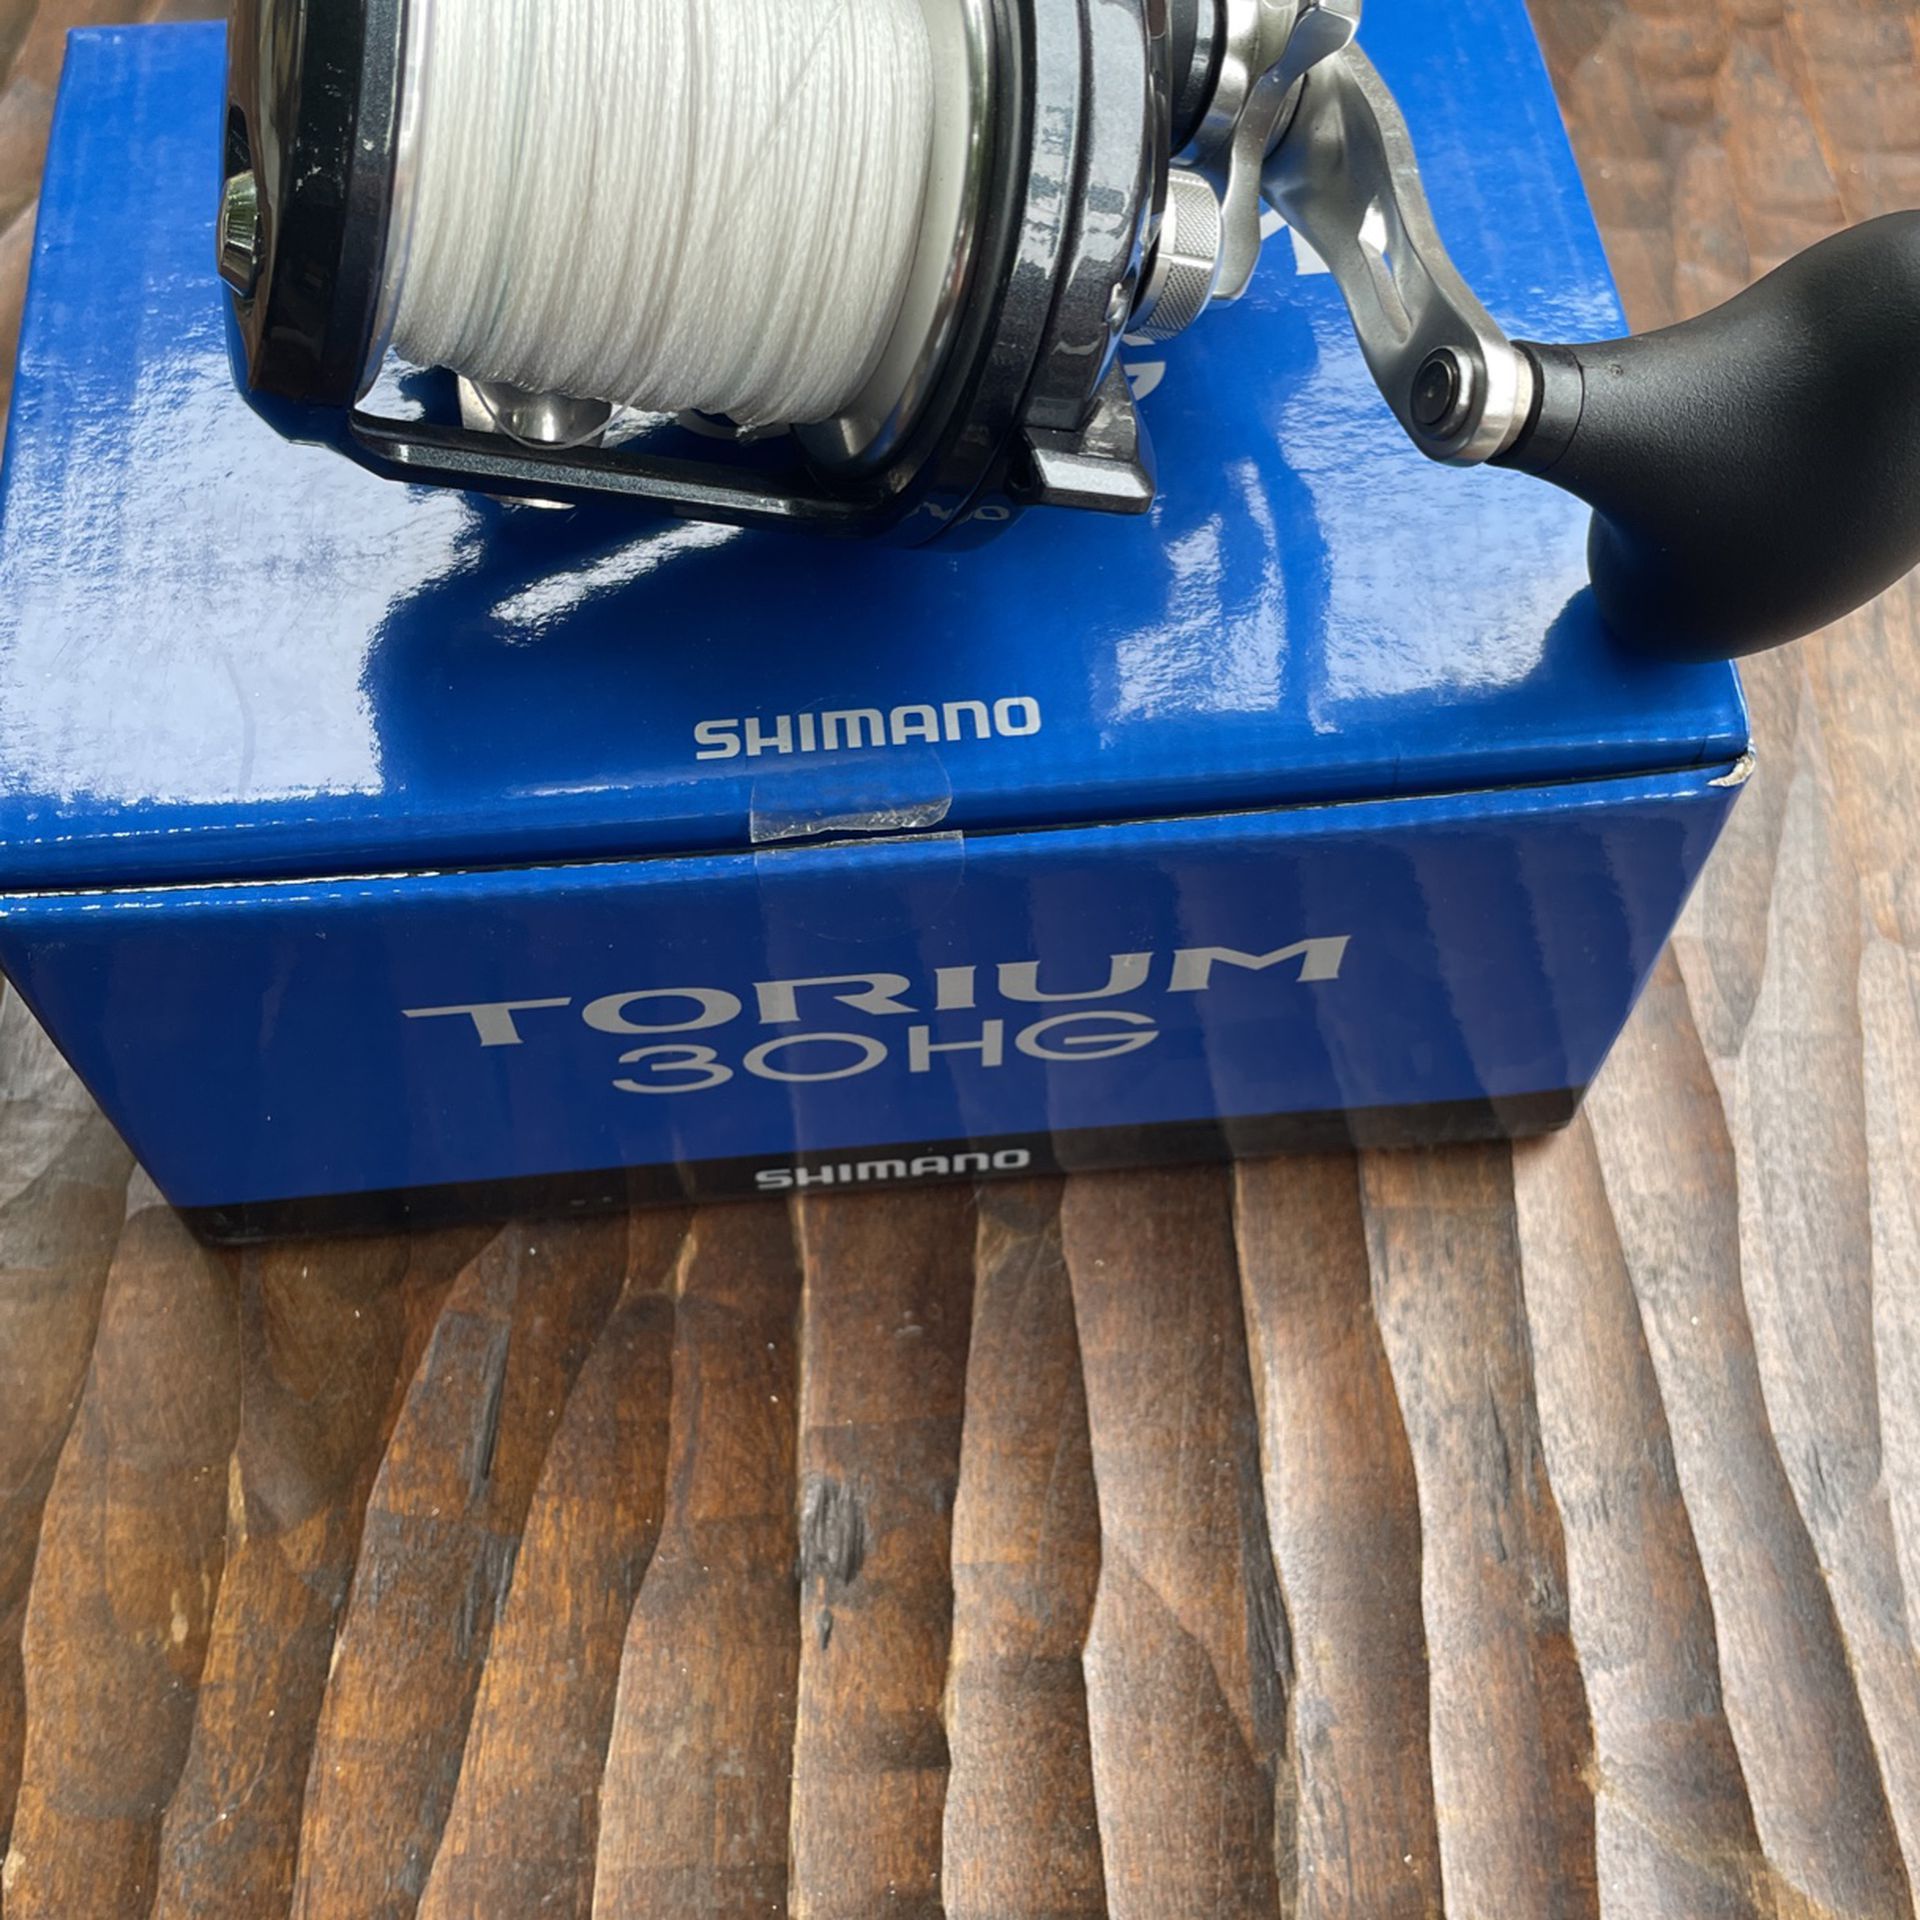 Shimano Torium 30 HG Fishing Reel for Sale in Santa Ana, CA - OfferUp